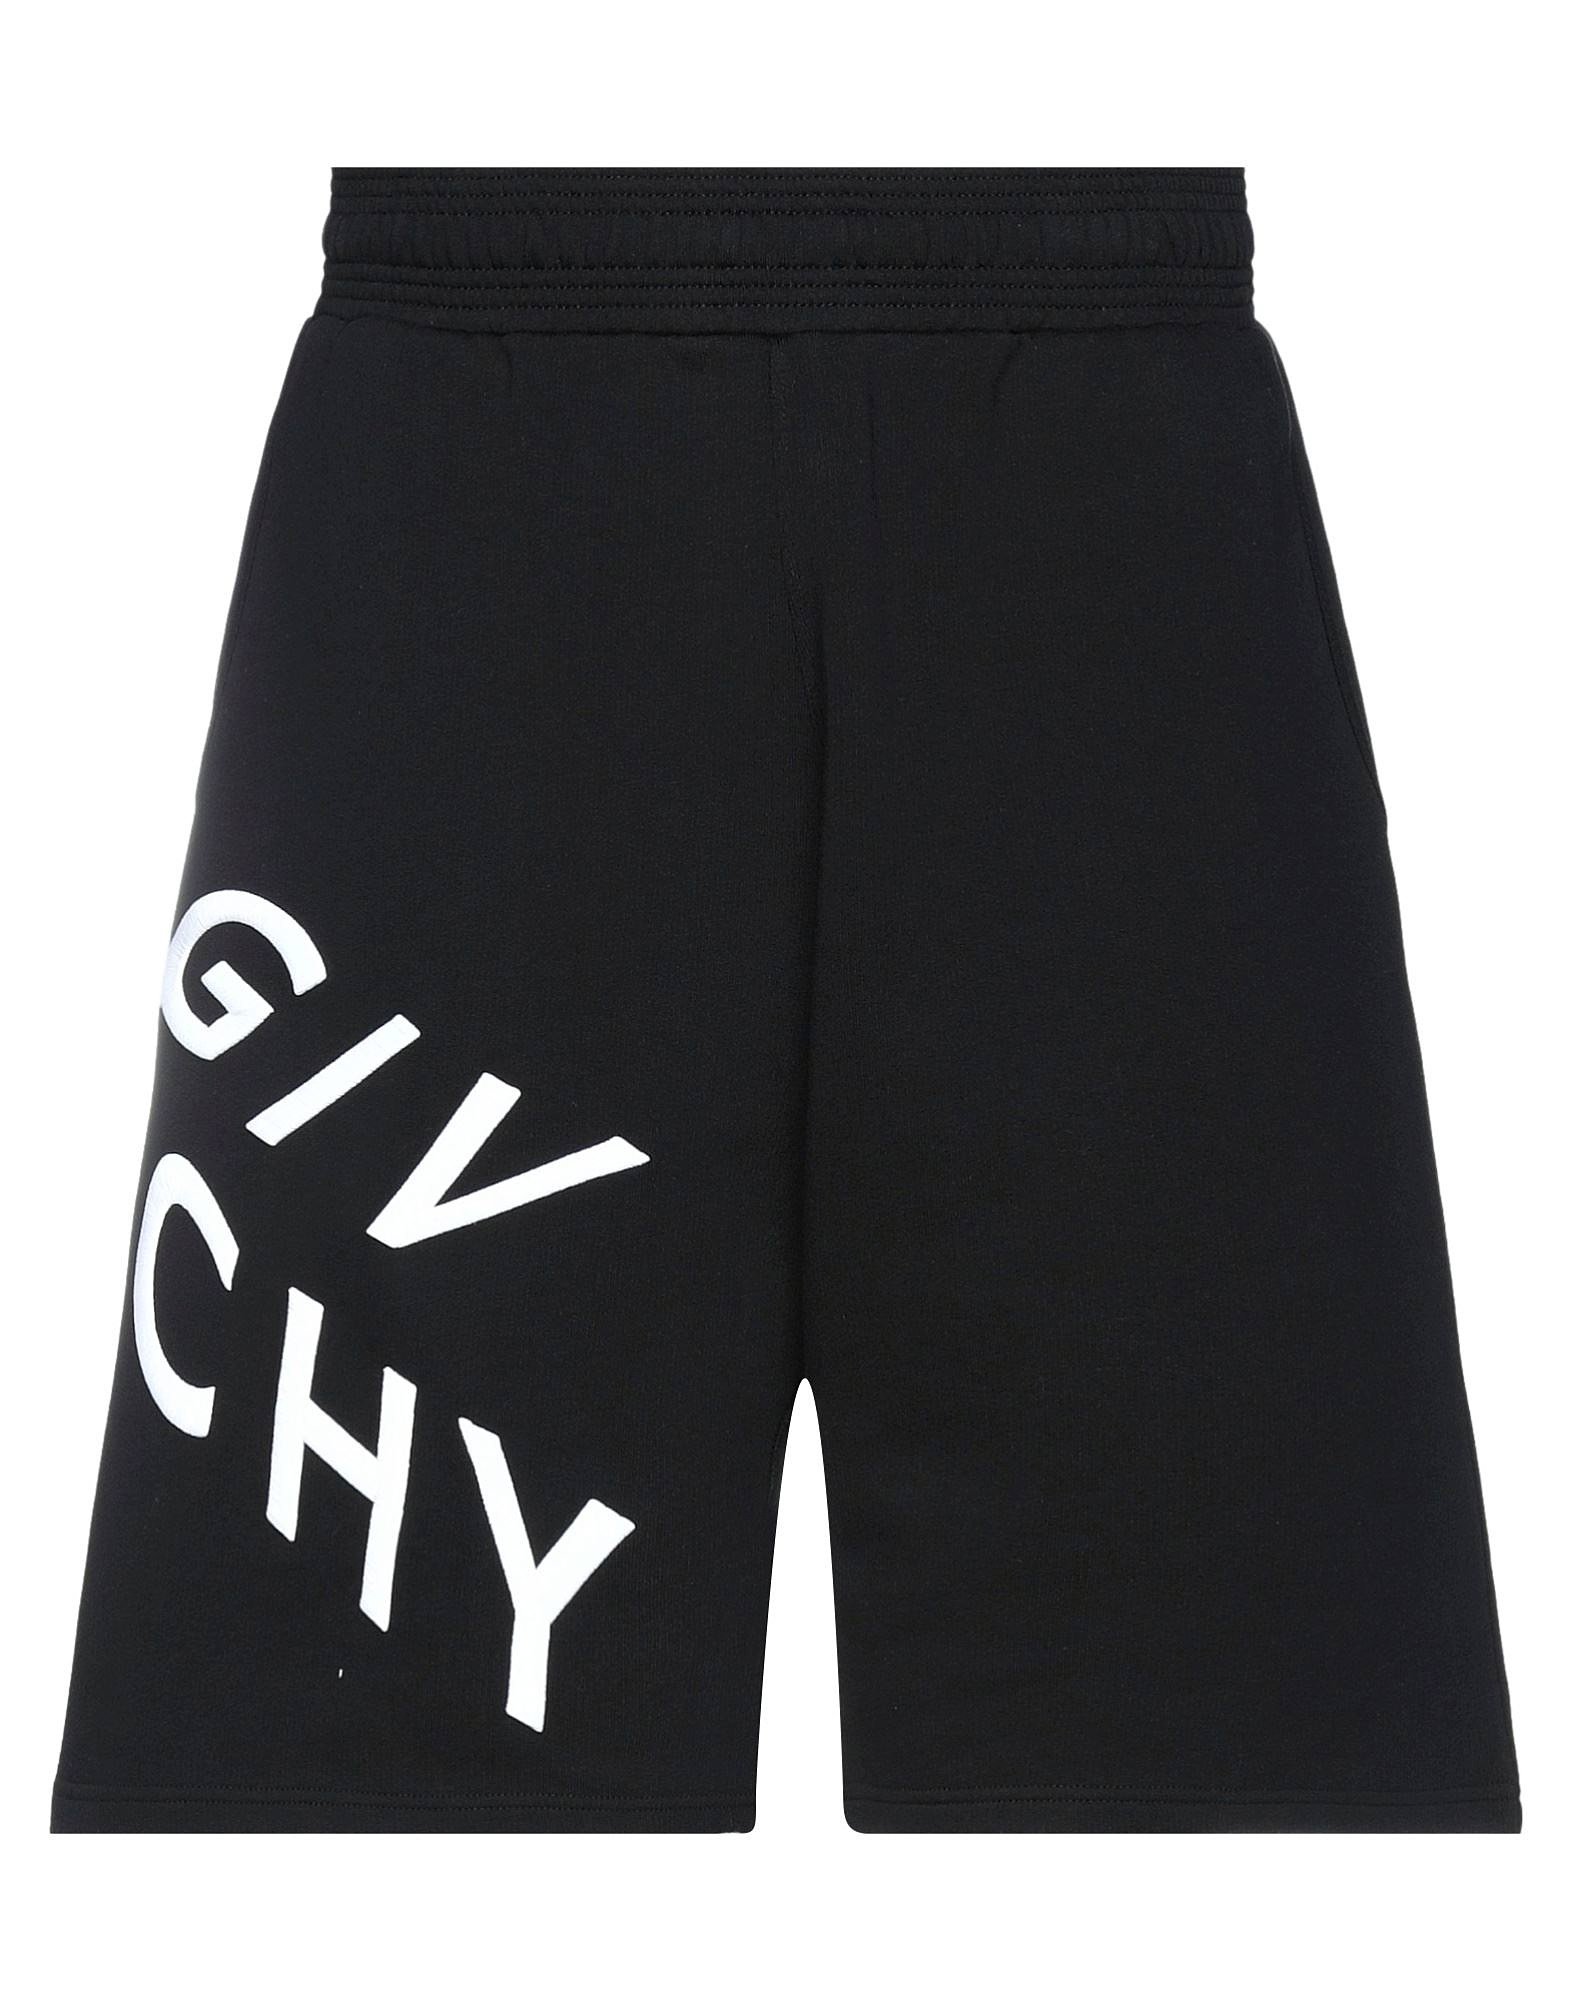 Style samples for incorporating sweatshirt half pants as summer street ...